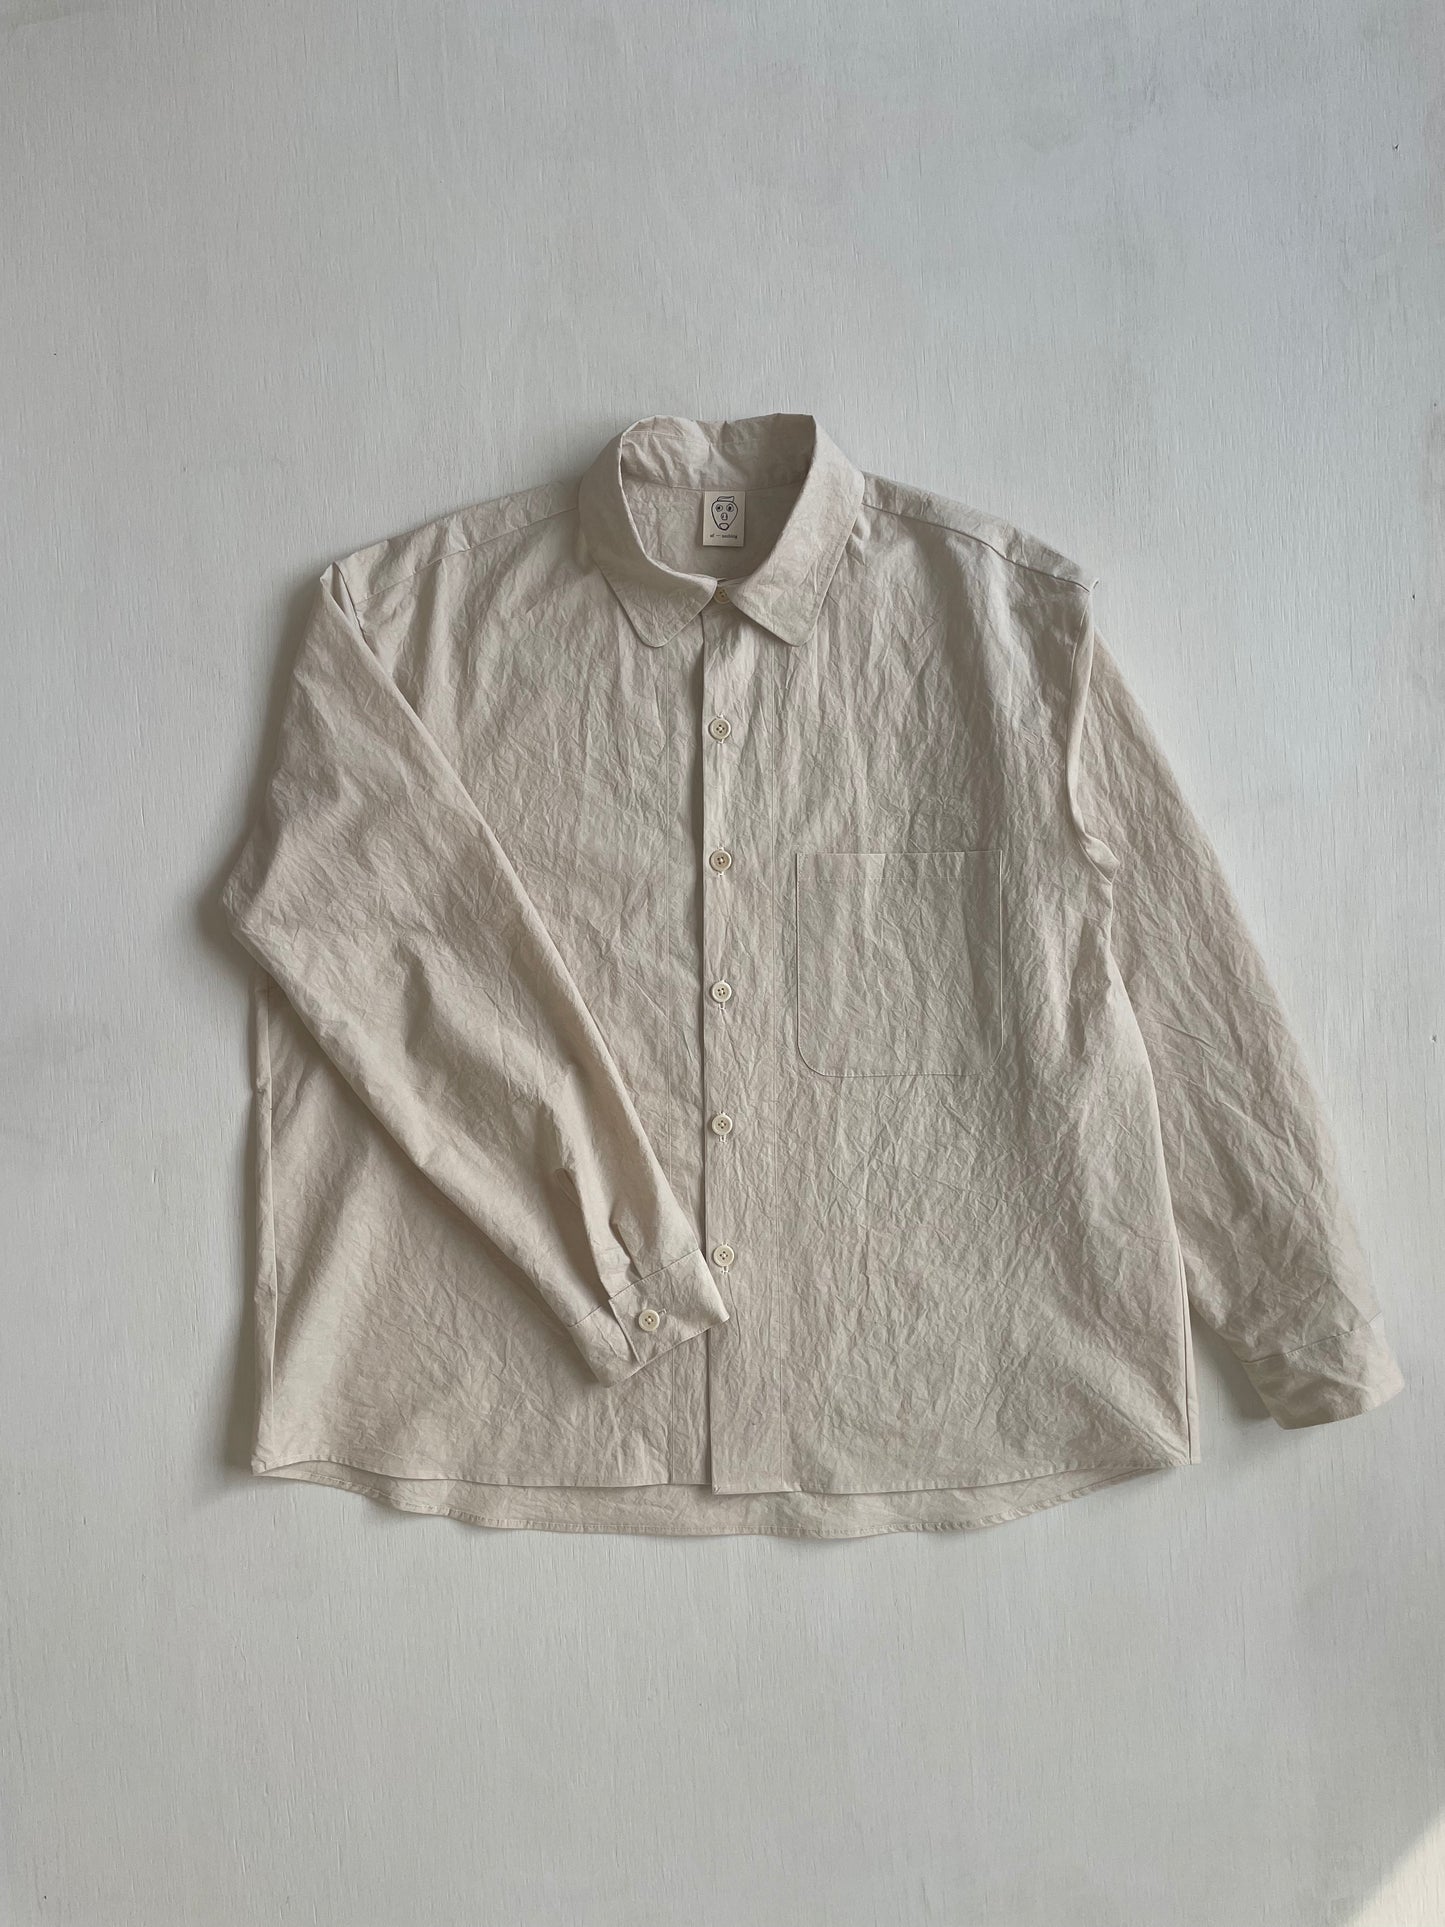 Tent Shirt in Cotton/Linen Typewriter Cloth